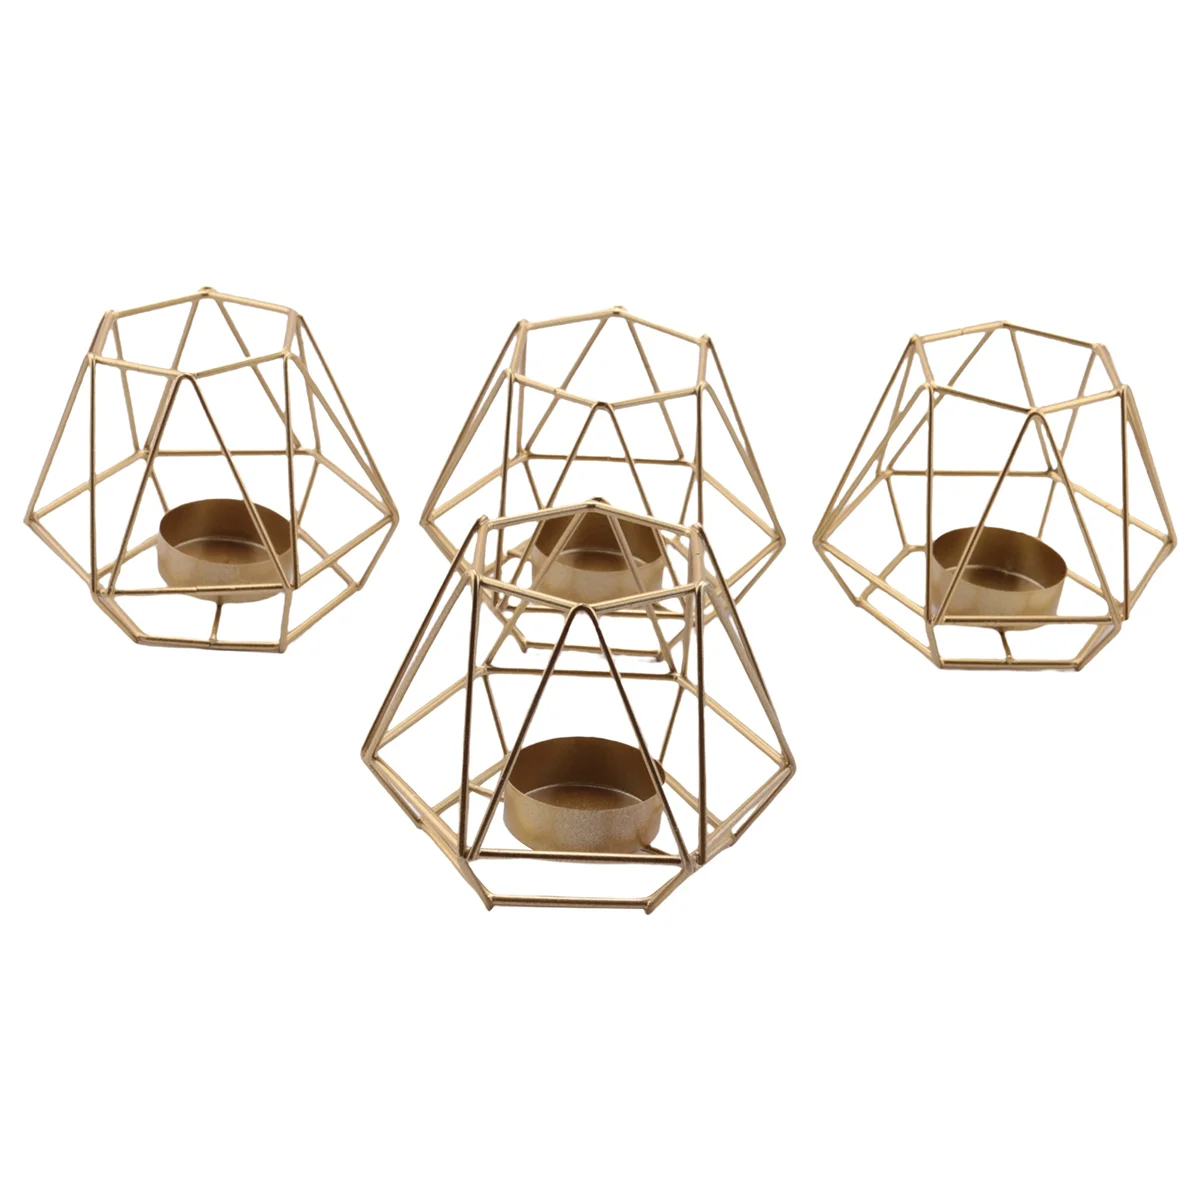 

4 Pcs Metal Geometric Design Tea Light Votive Candle Holders, Hollow Tealight Candle Holders for Wedding Home Decoration